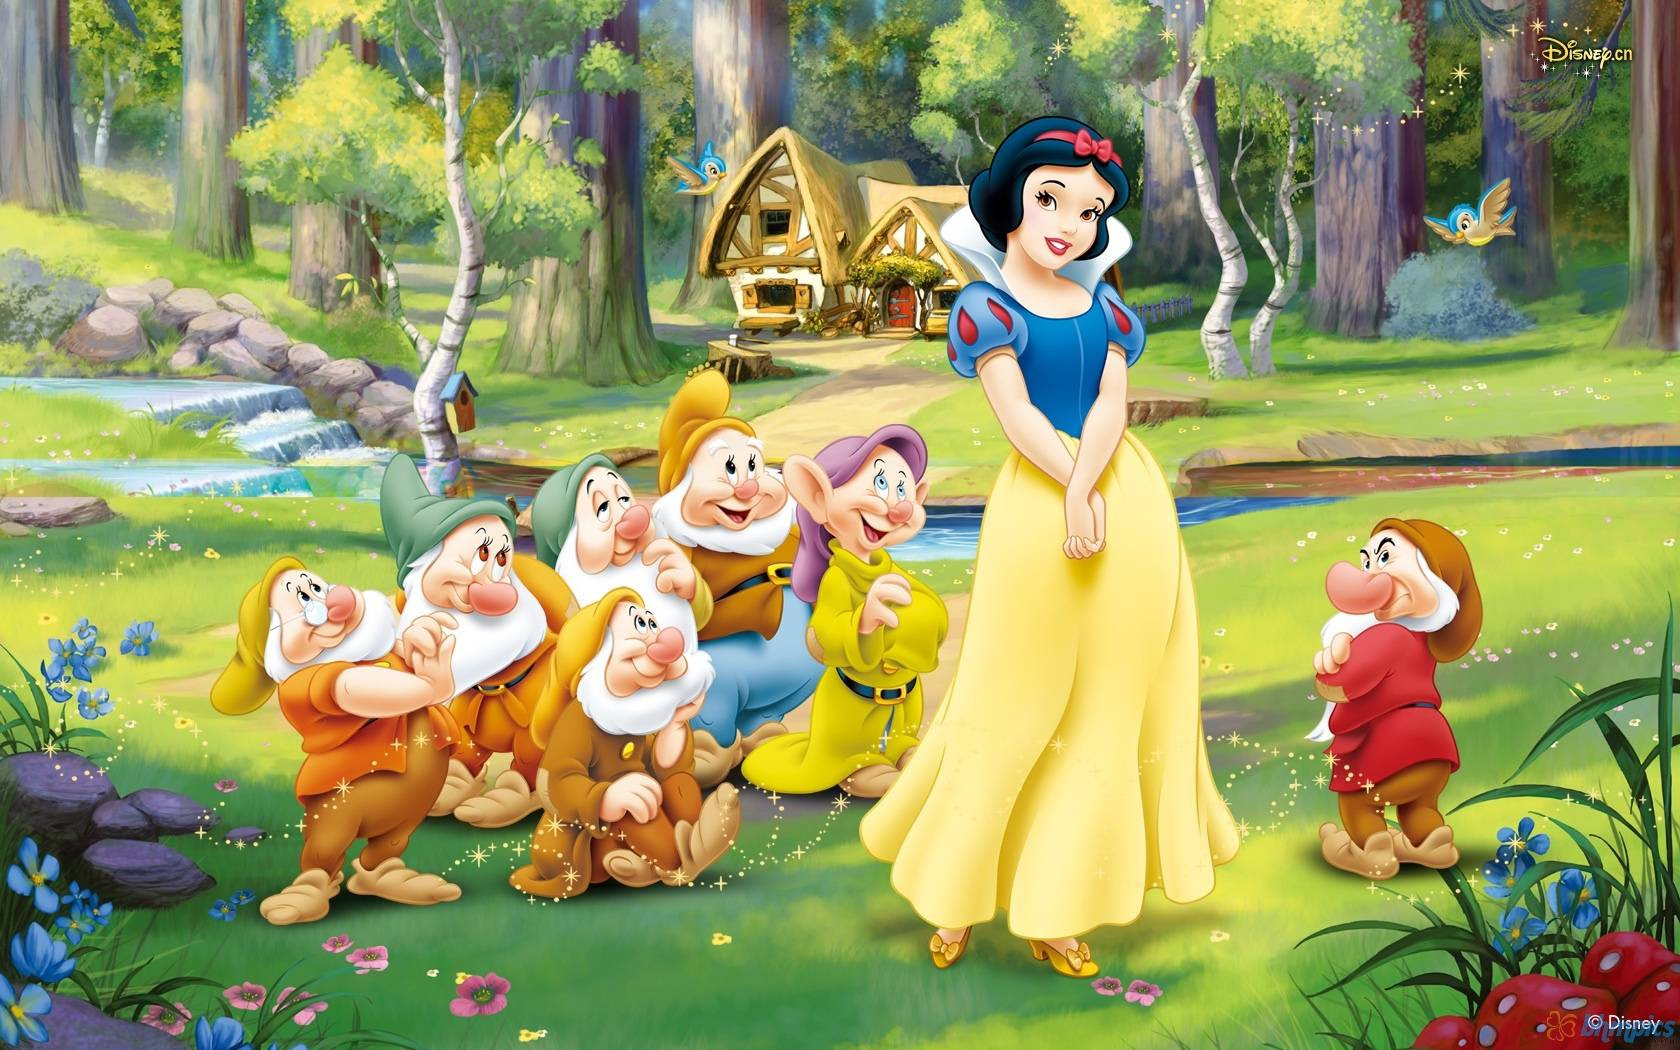 Snow White and Seven dwarfs